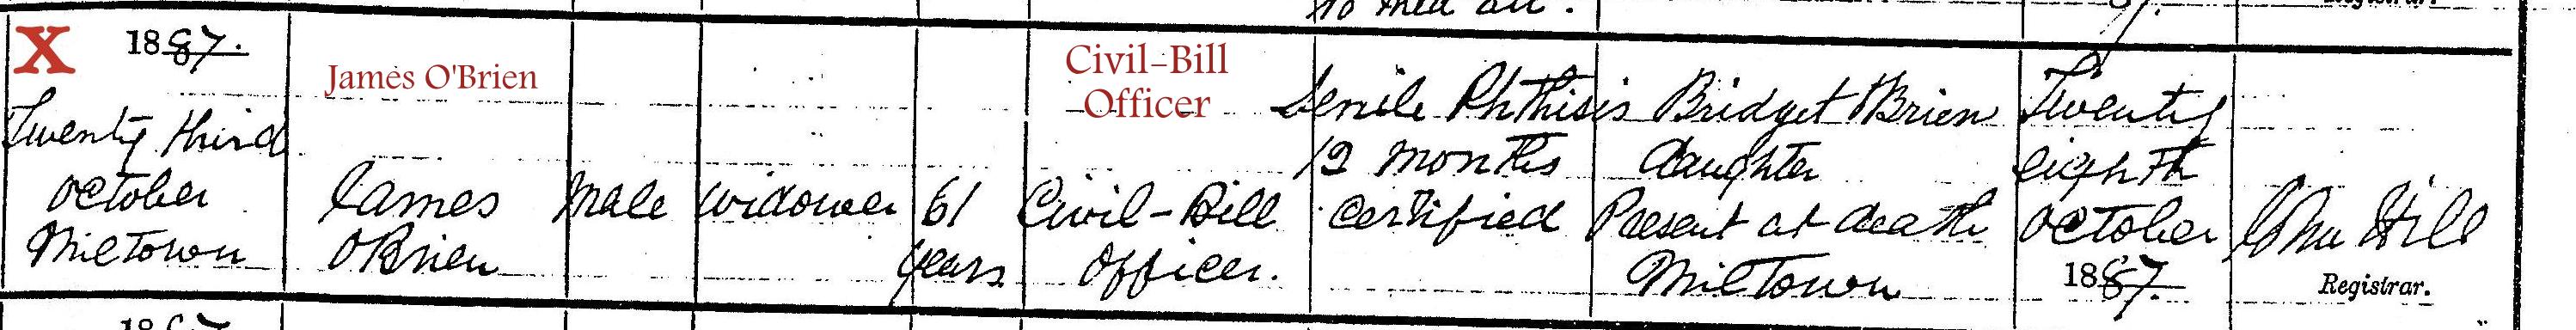 Death James O'Brien  23 Oct 1887 Civil Bill Officer crop.jpg